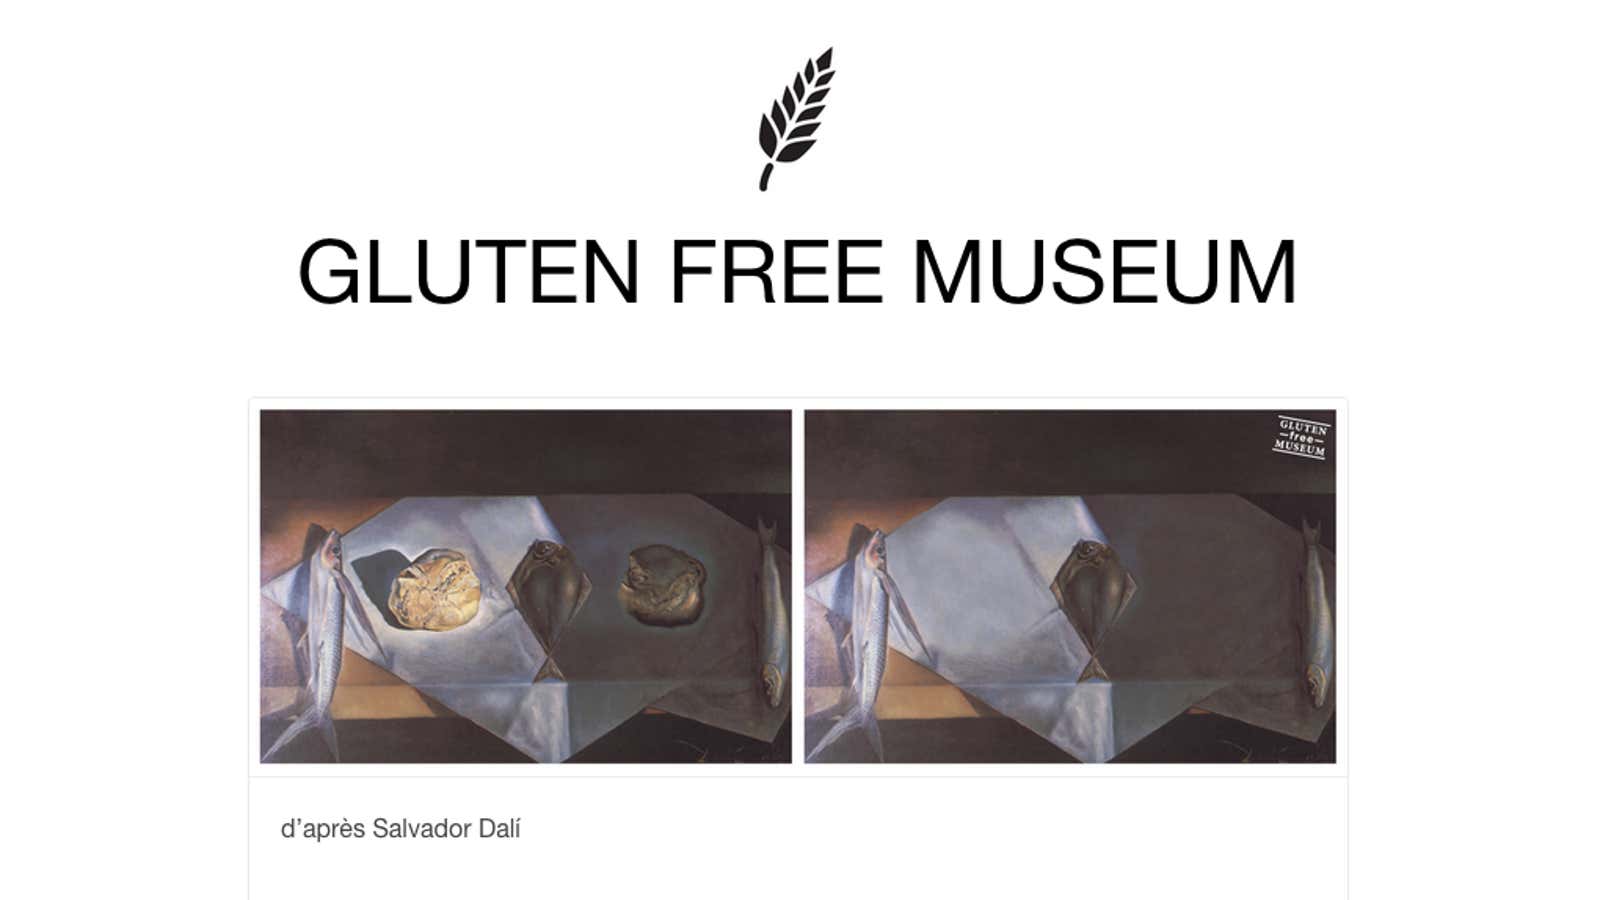 “Gluten Free Museum” Tumblr re-creates iconic images sans grains